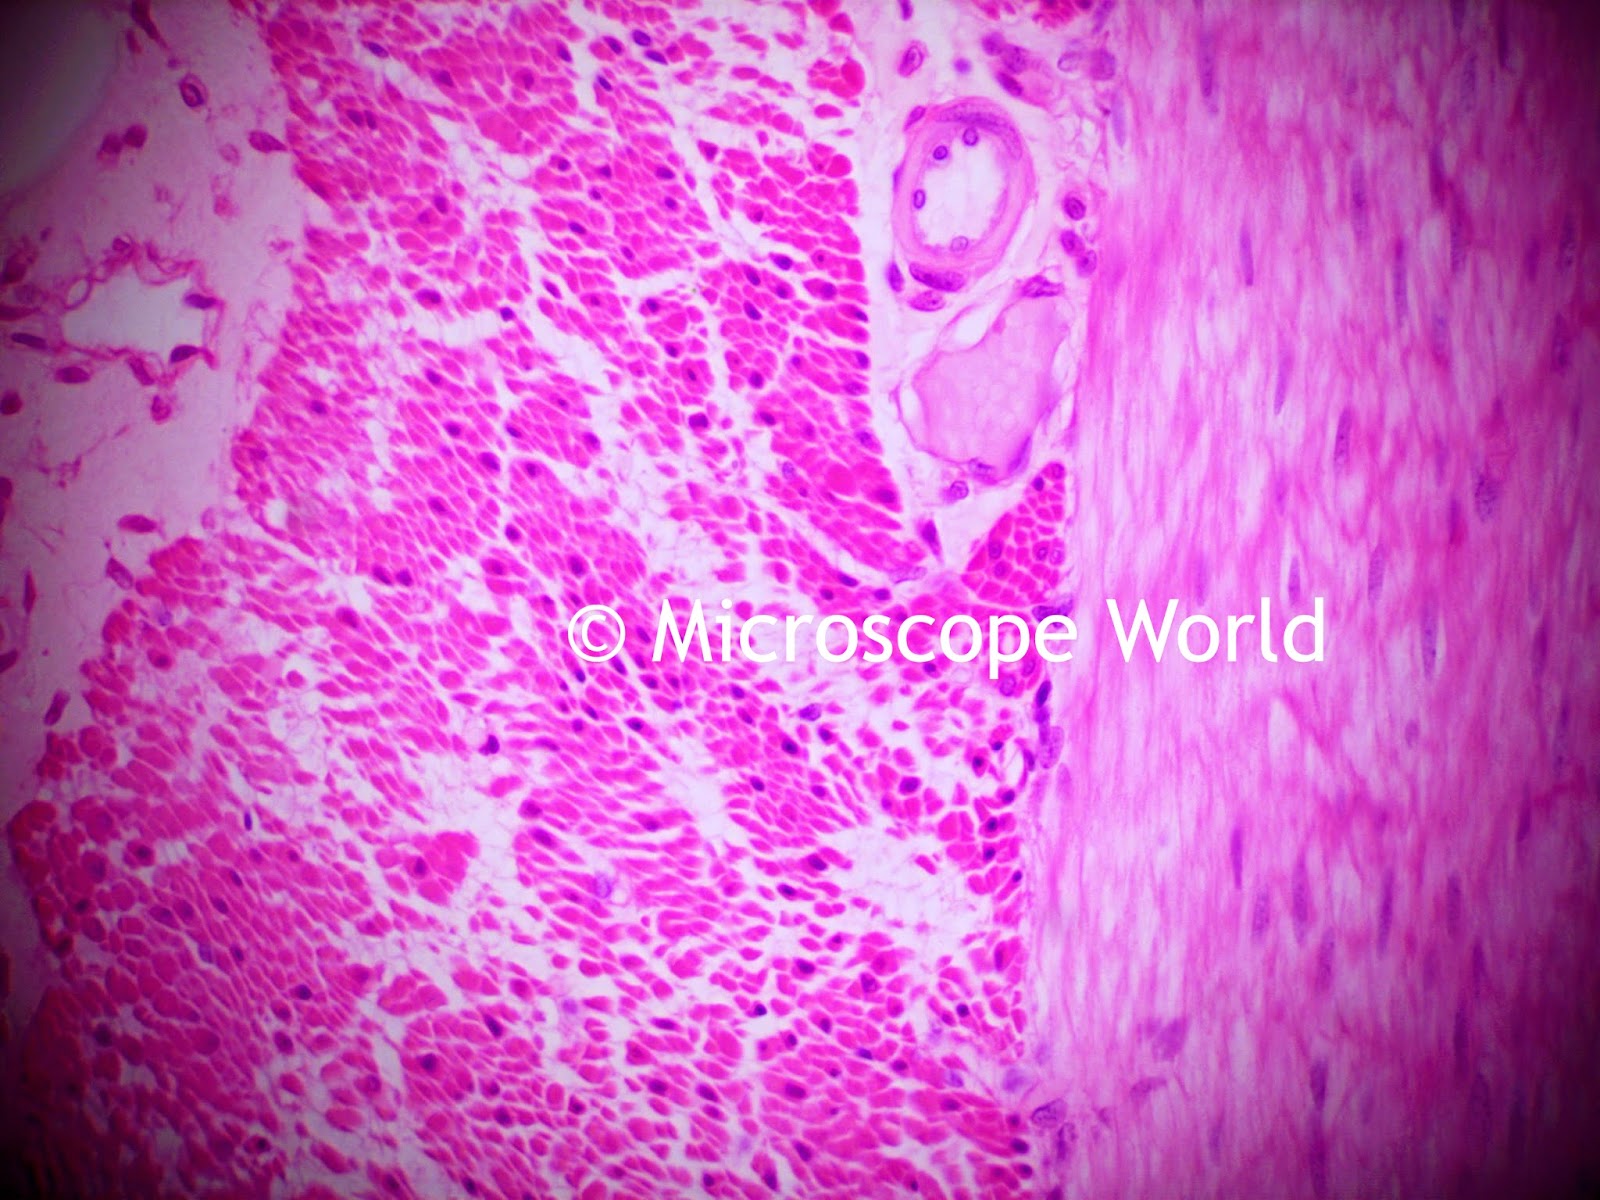 microscope image at 400x